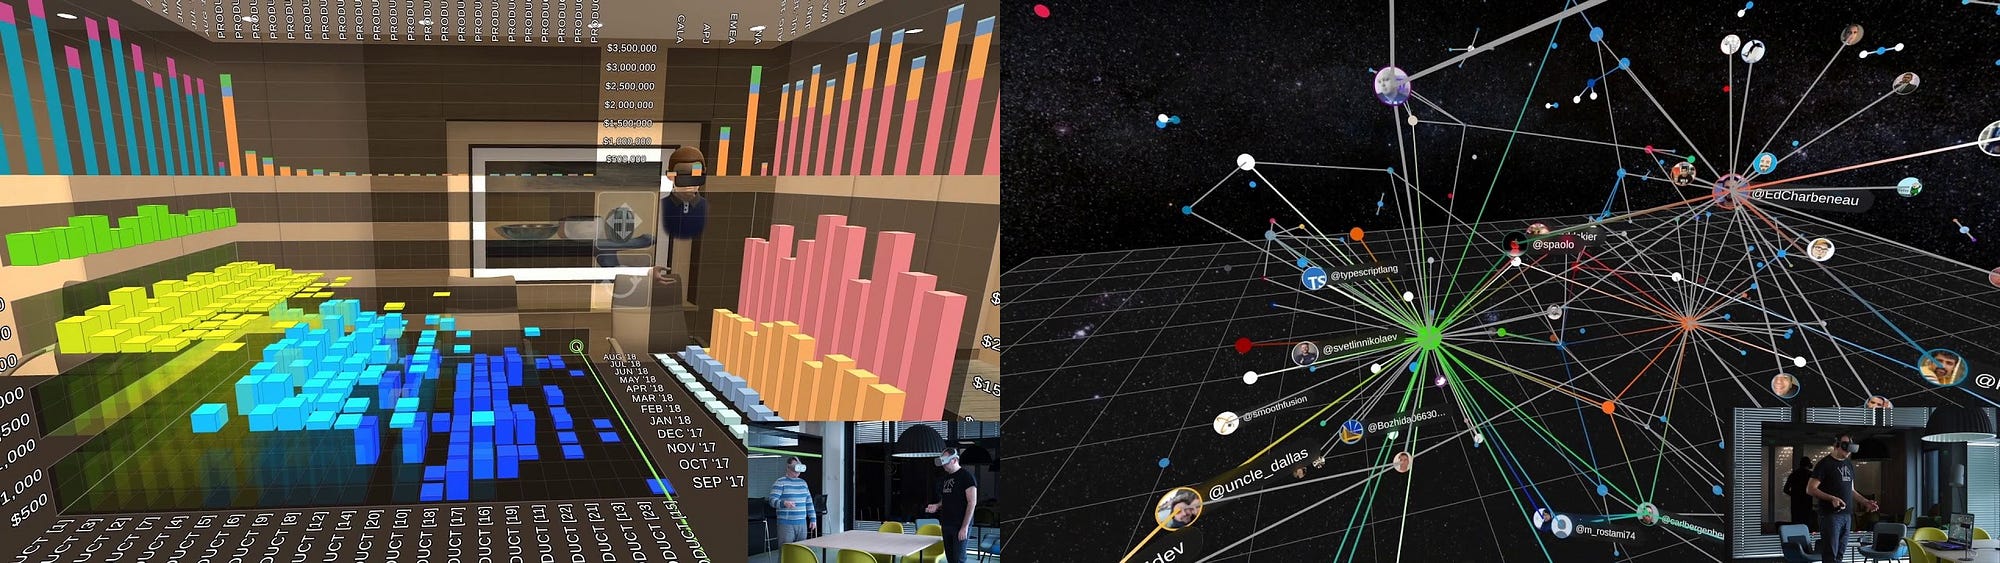 Data Visualization Taken to the Next Dimension through VR | by Georgi  Atanasov | Telerik AR VR | Medium